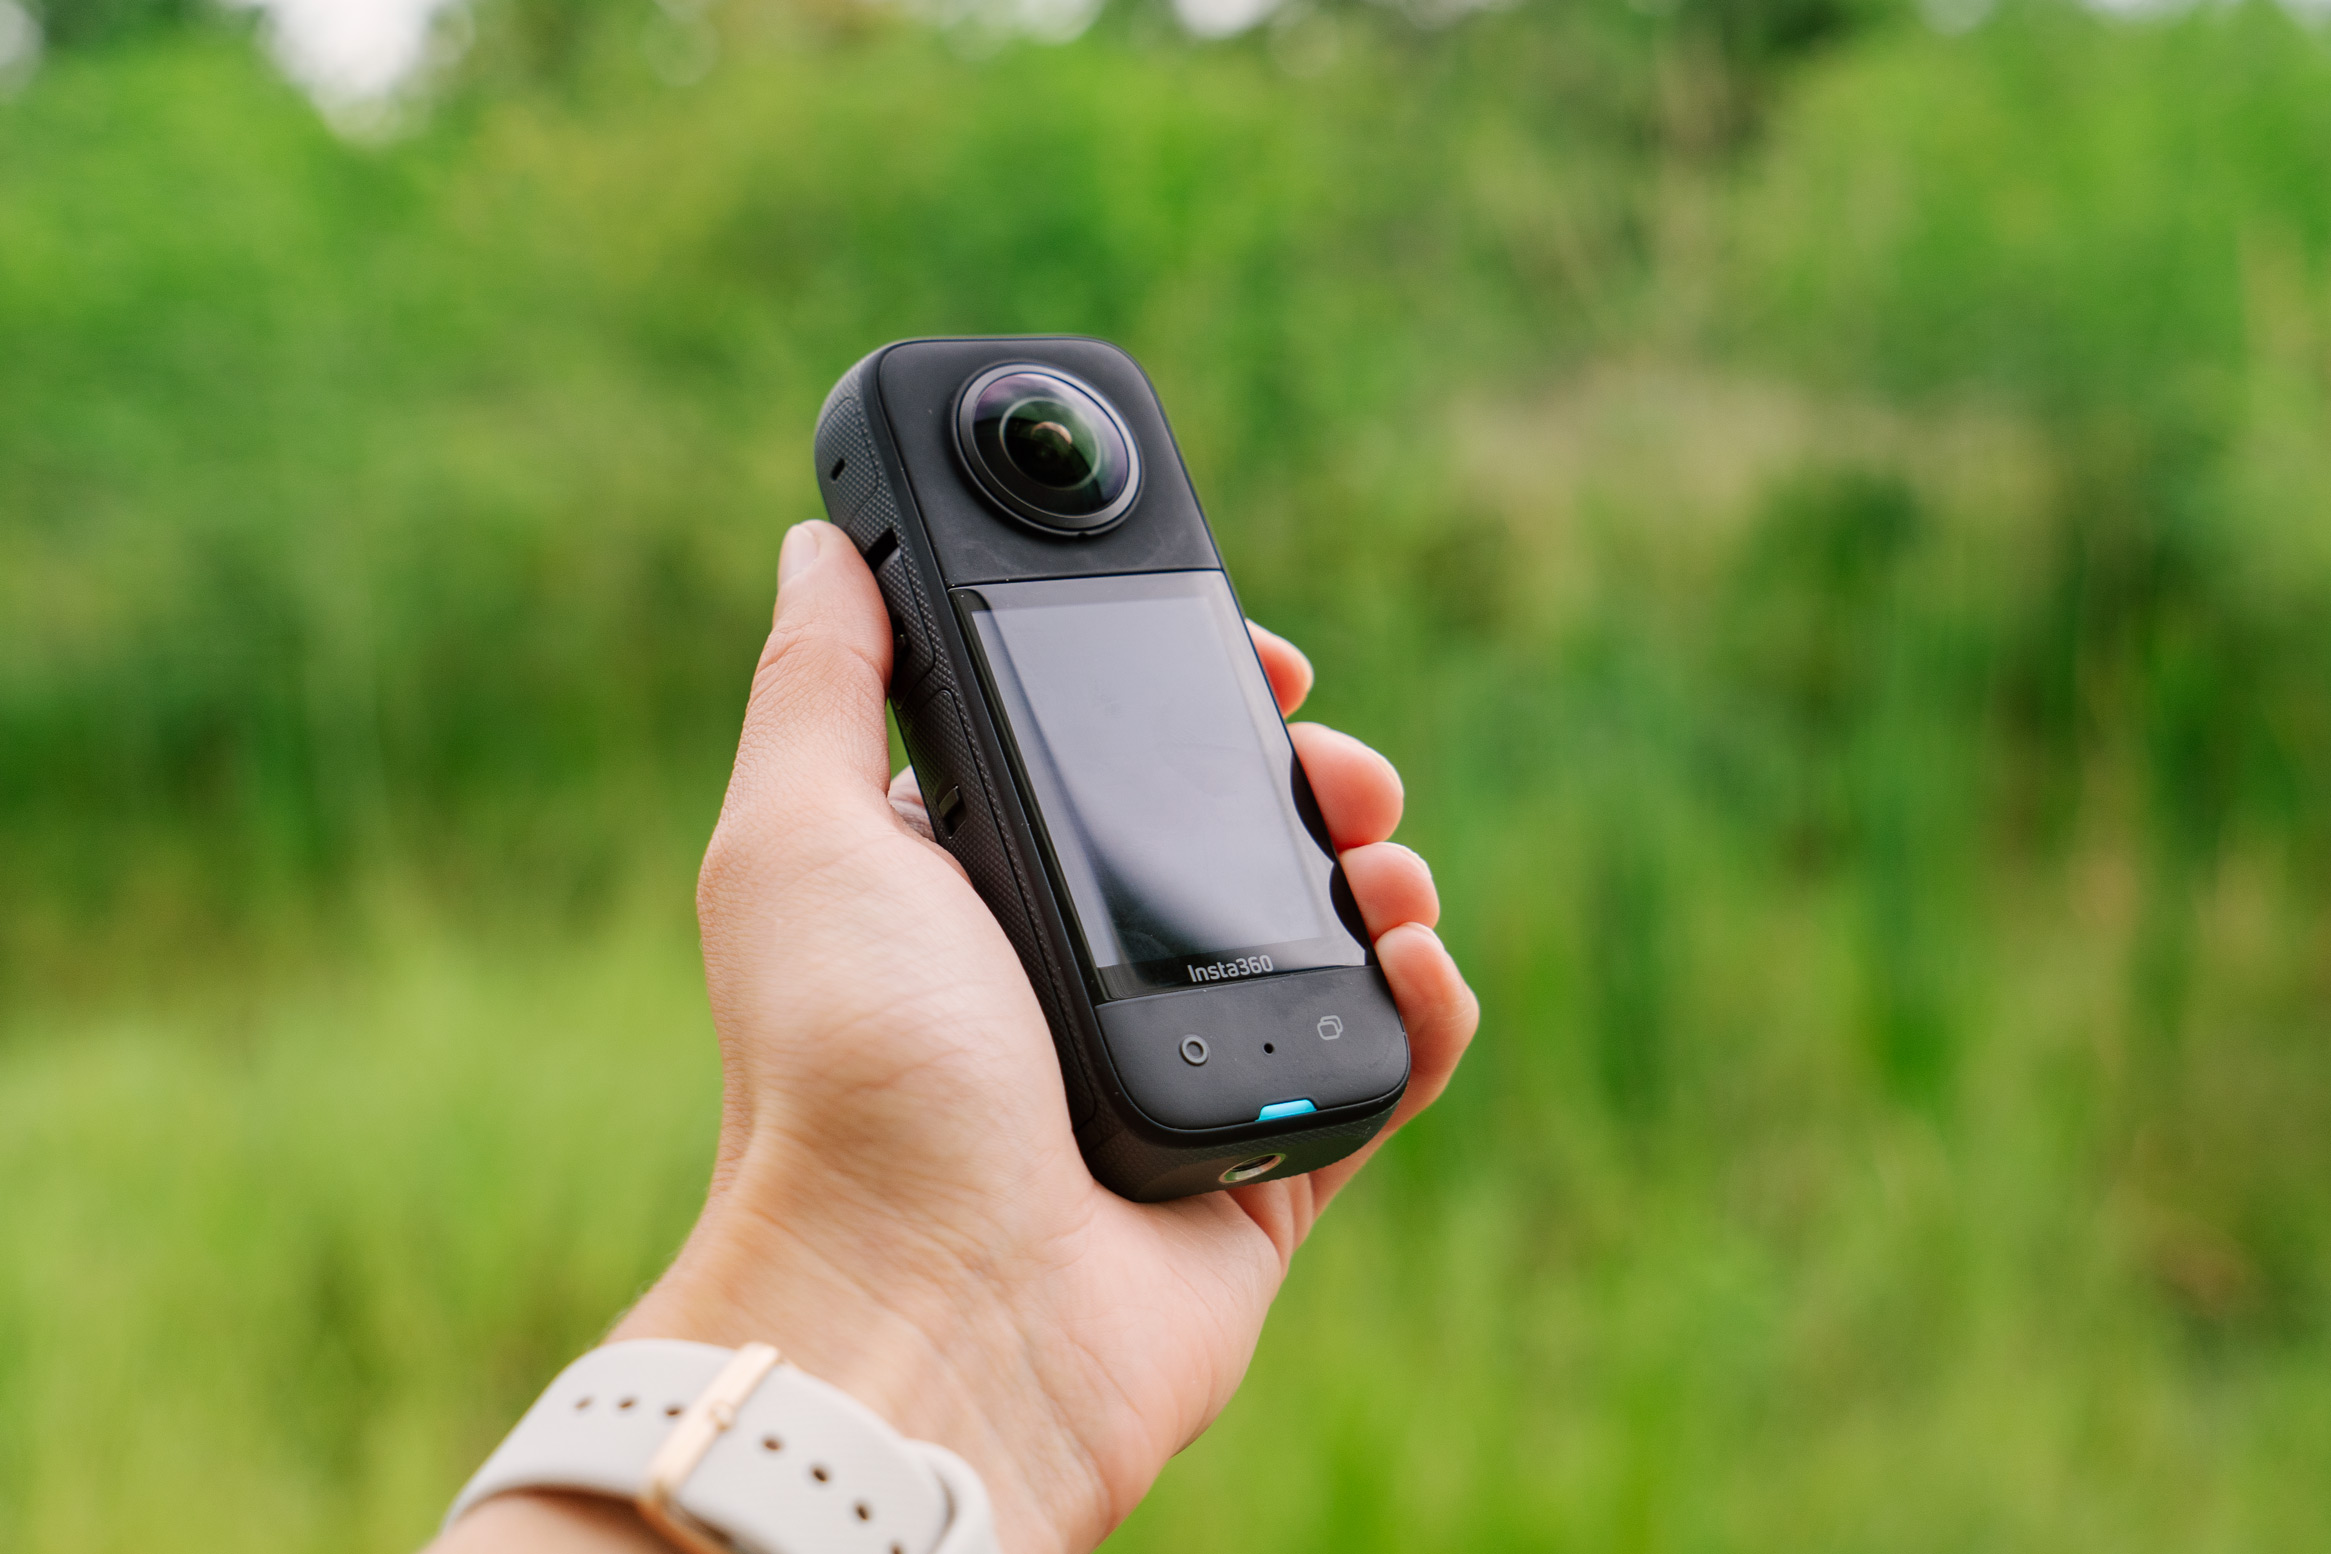 POWRIG Lens Protector for Insta 360 X3 Action Camera